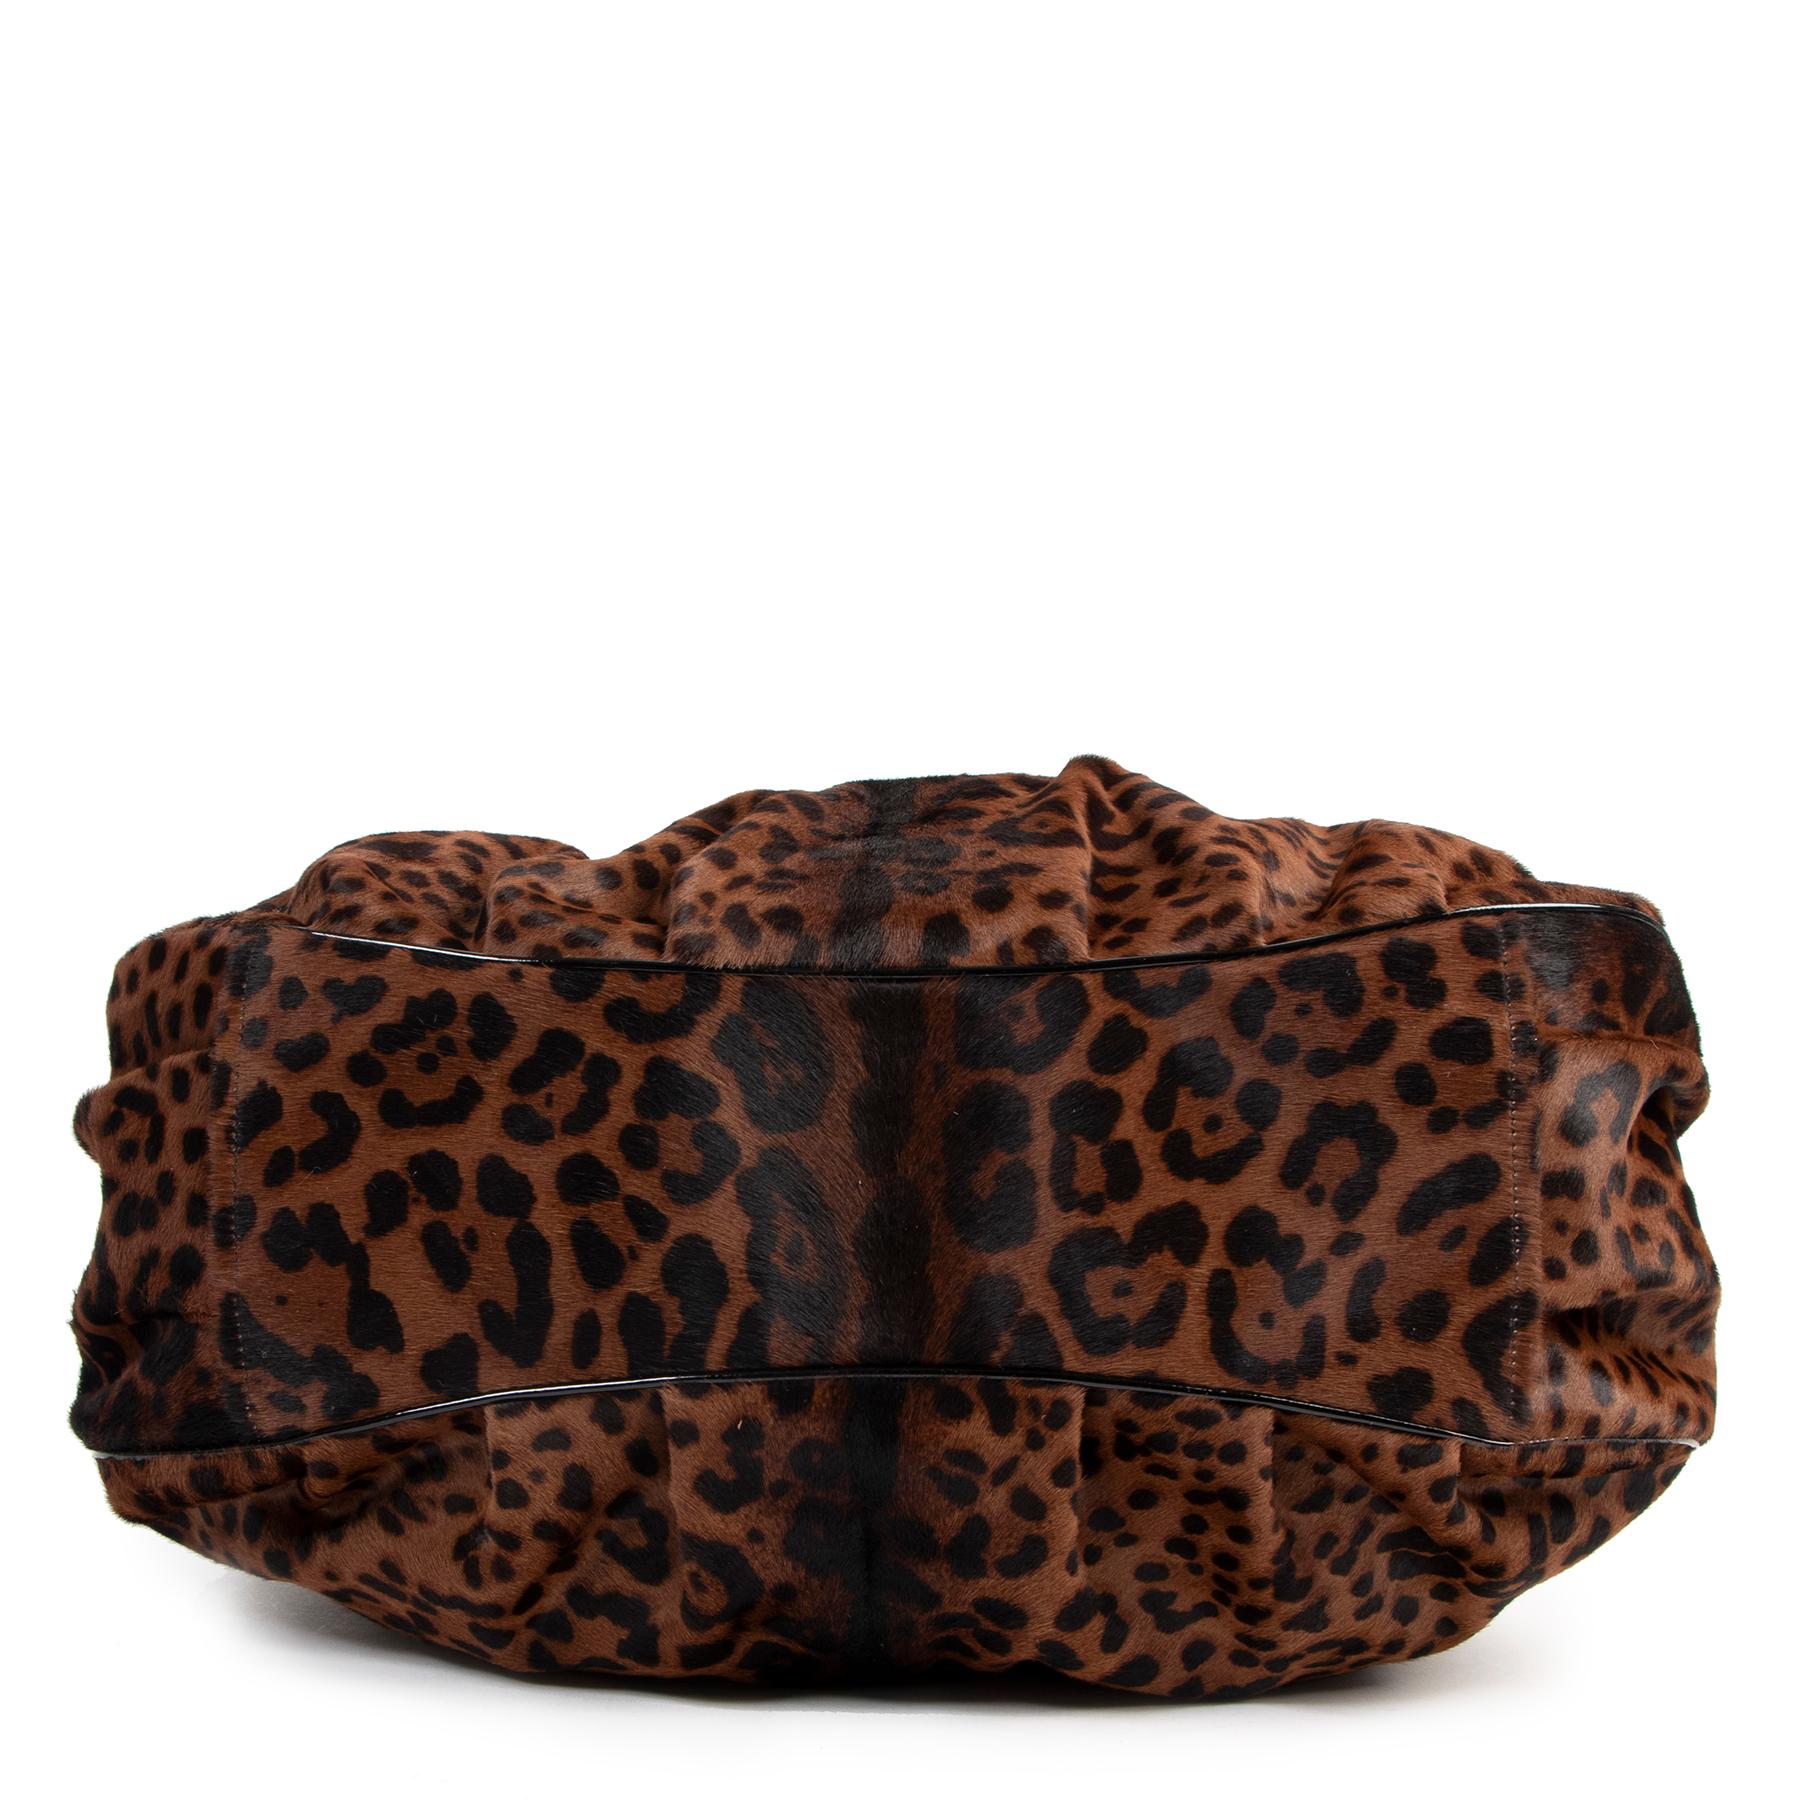 Black Fendi Leopard Print Ponyhair Patent Leather Tote